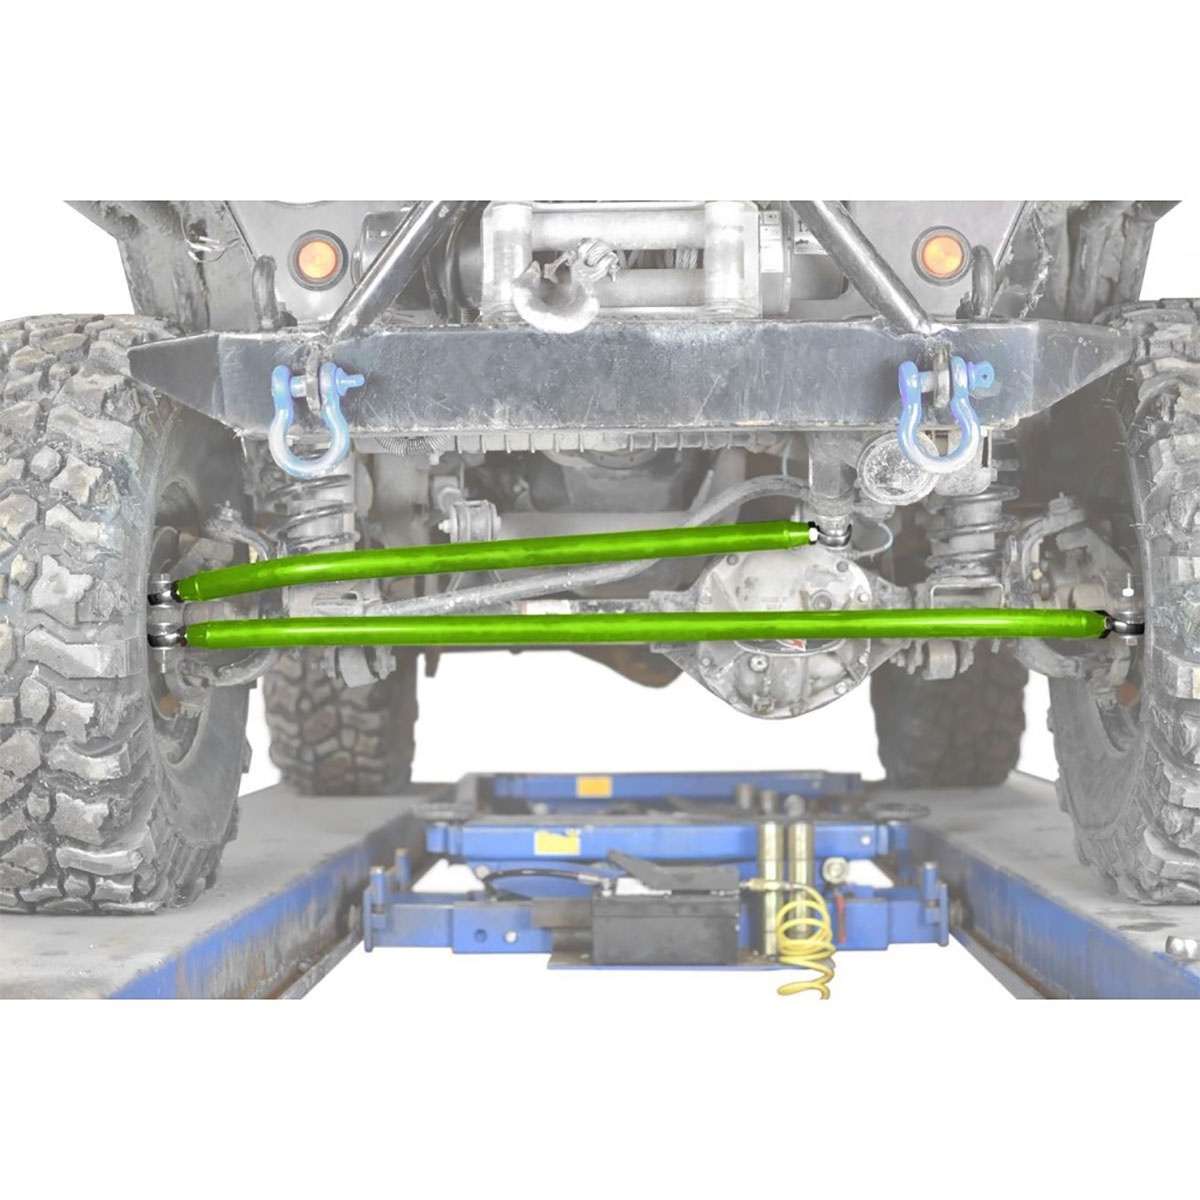 Jeep TJ Wrangler Neon Green Crossover Steering Kit